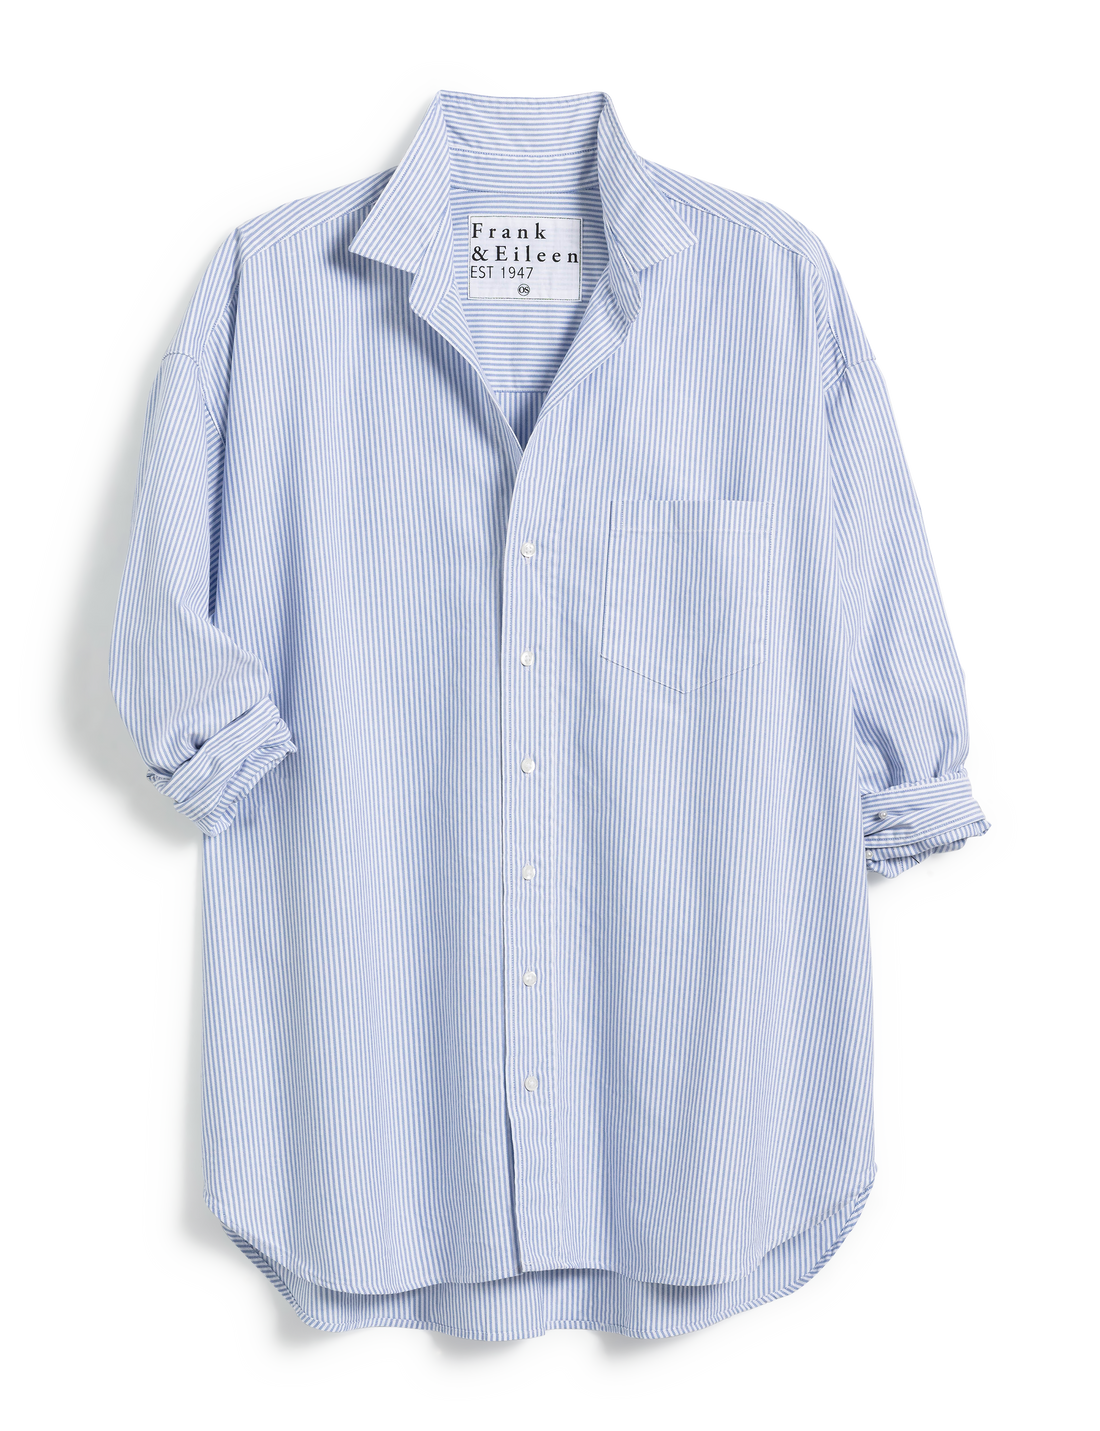 SHIRLEY Oversized Button-Up Shirt